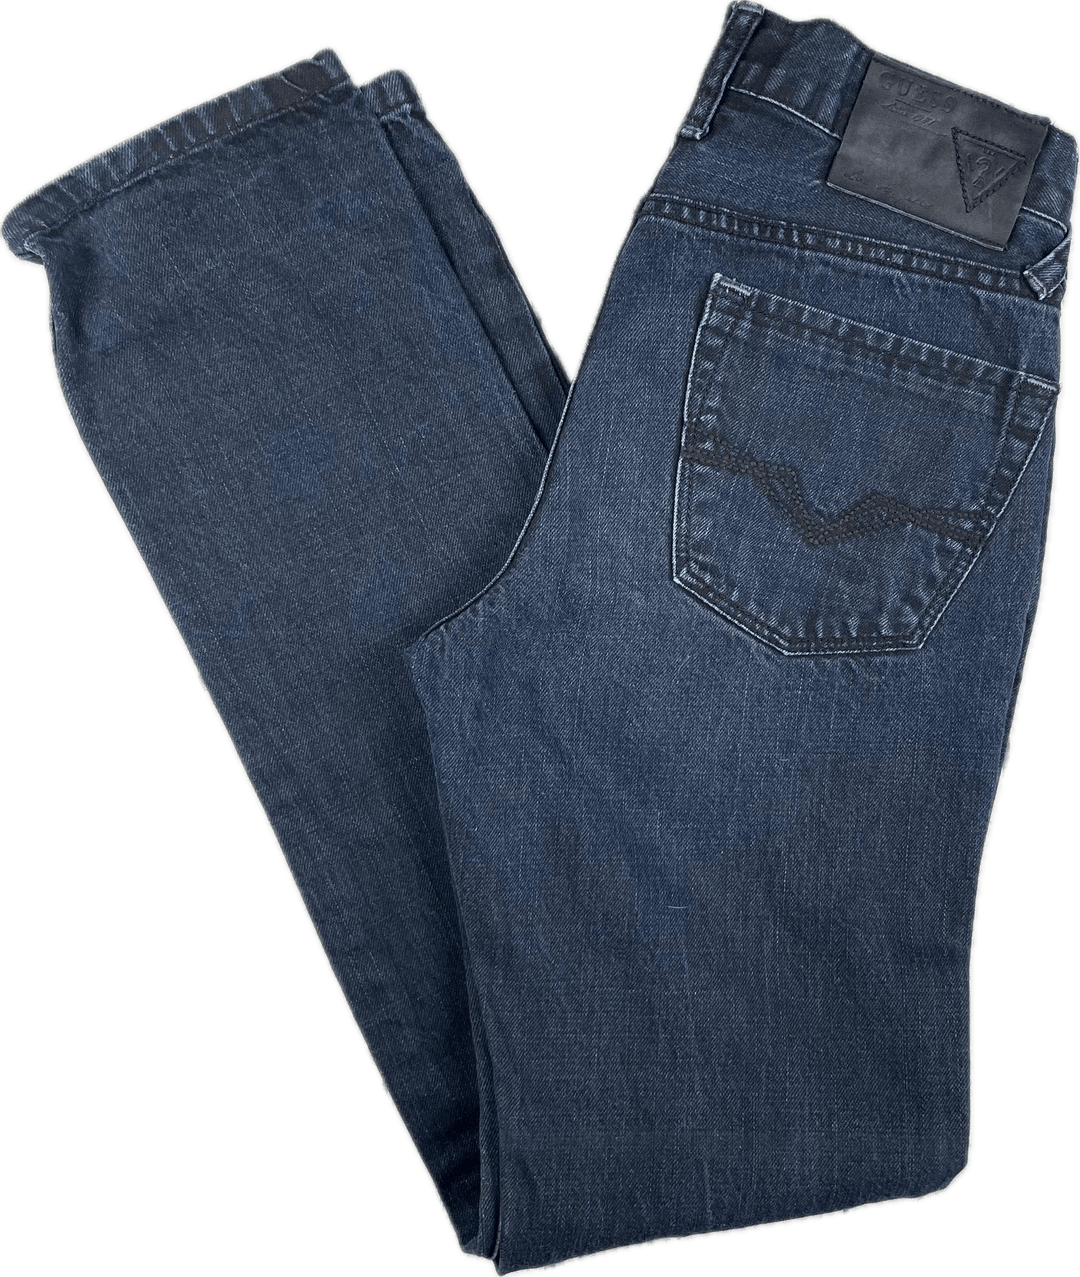 Guess 'Brit Rocker Narrow' Stretch Denim Jeans - Size 28/32 - Jean Pool